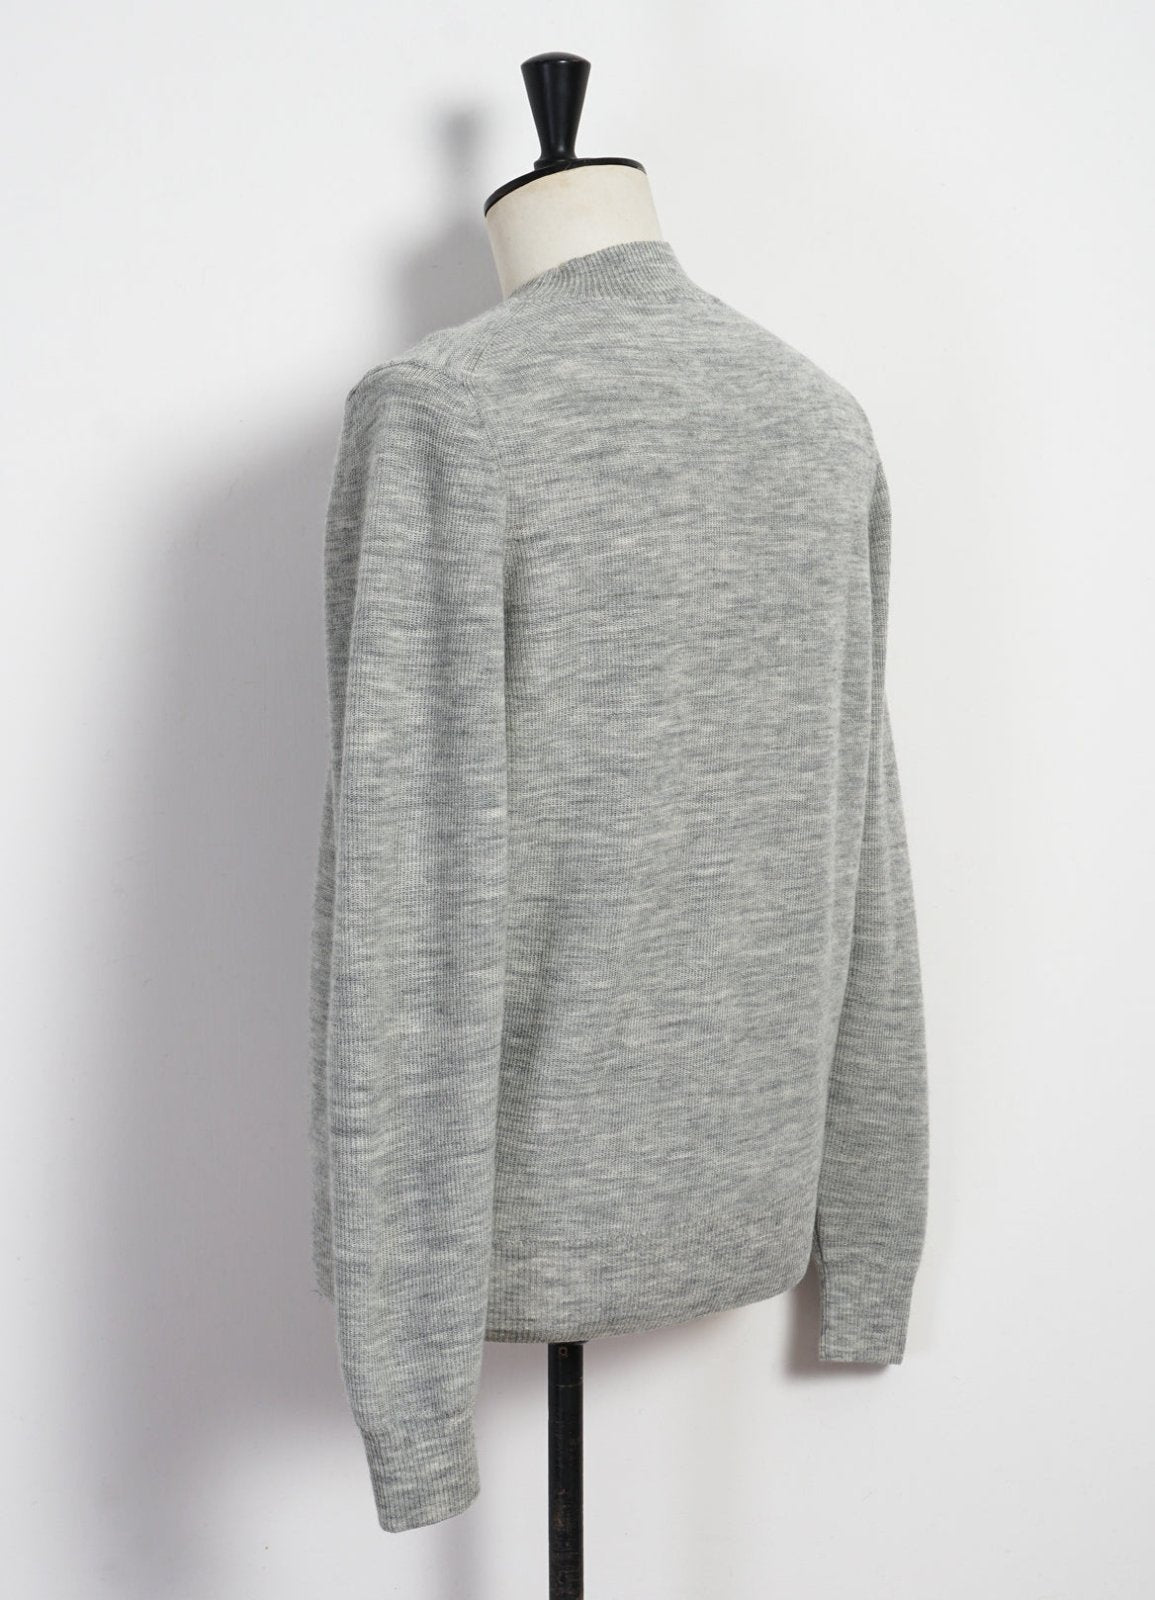 HANSEN GARMENTS - ANDRE | Knitted Crew Neck Sweater | Winter Grey - HANSEN Garments